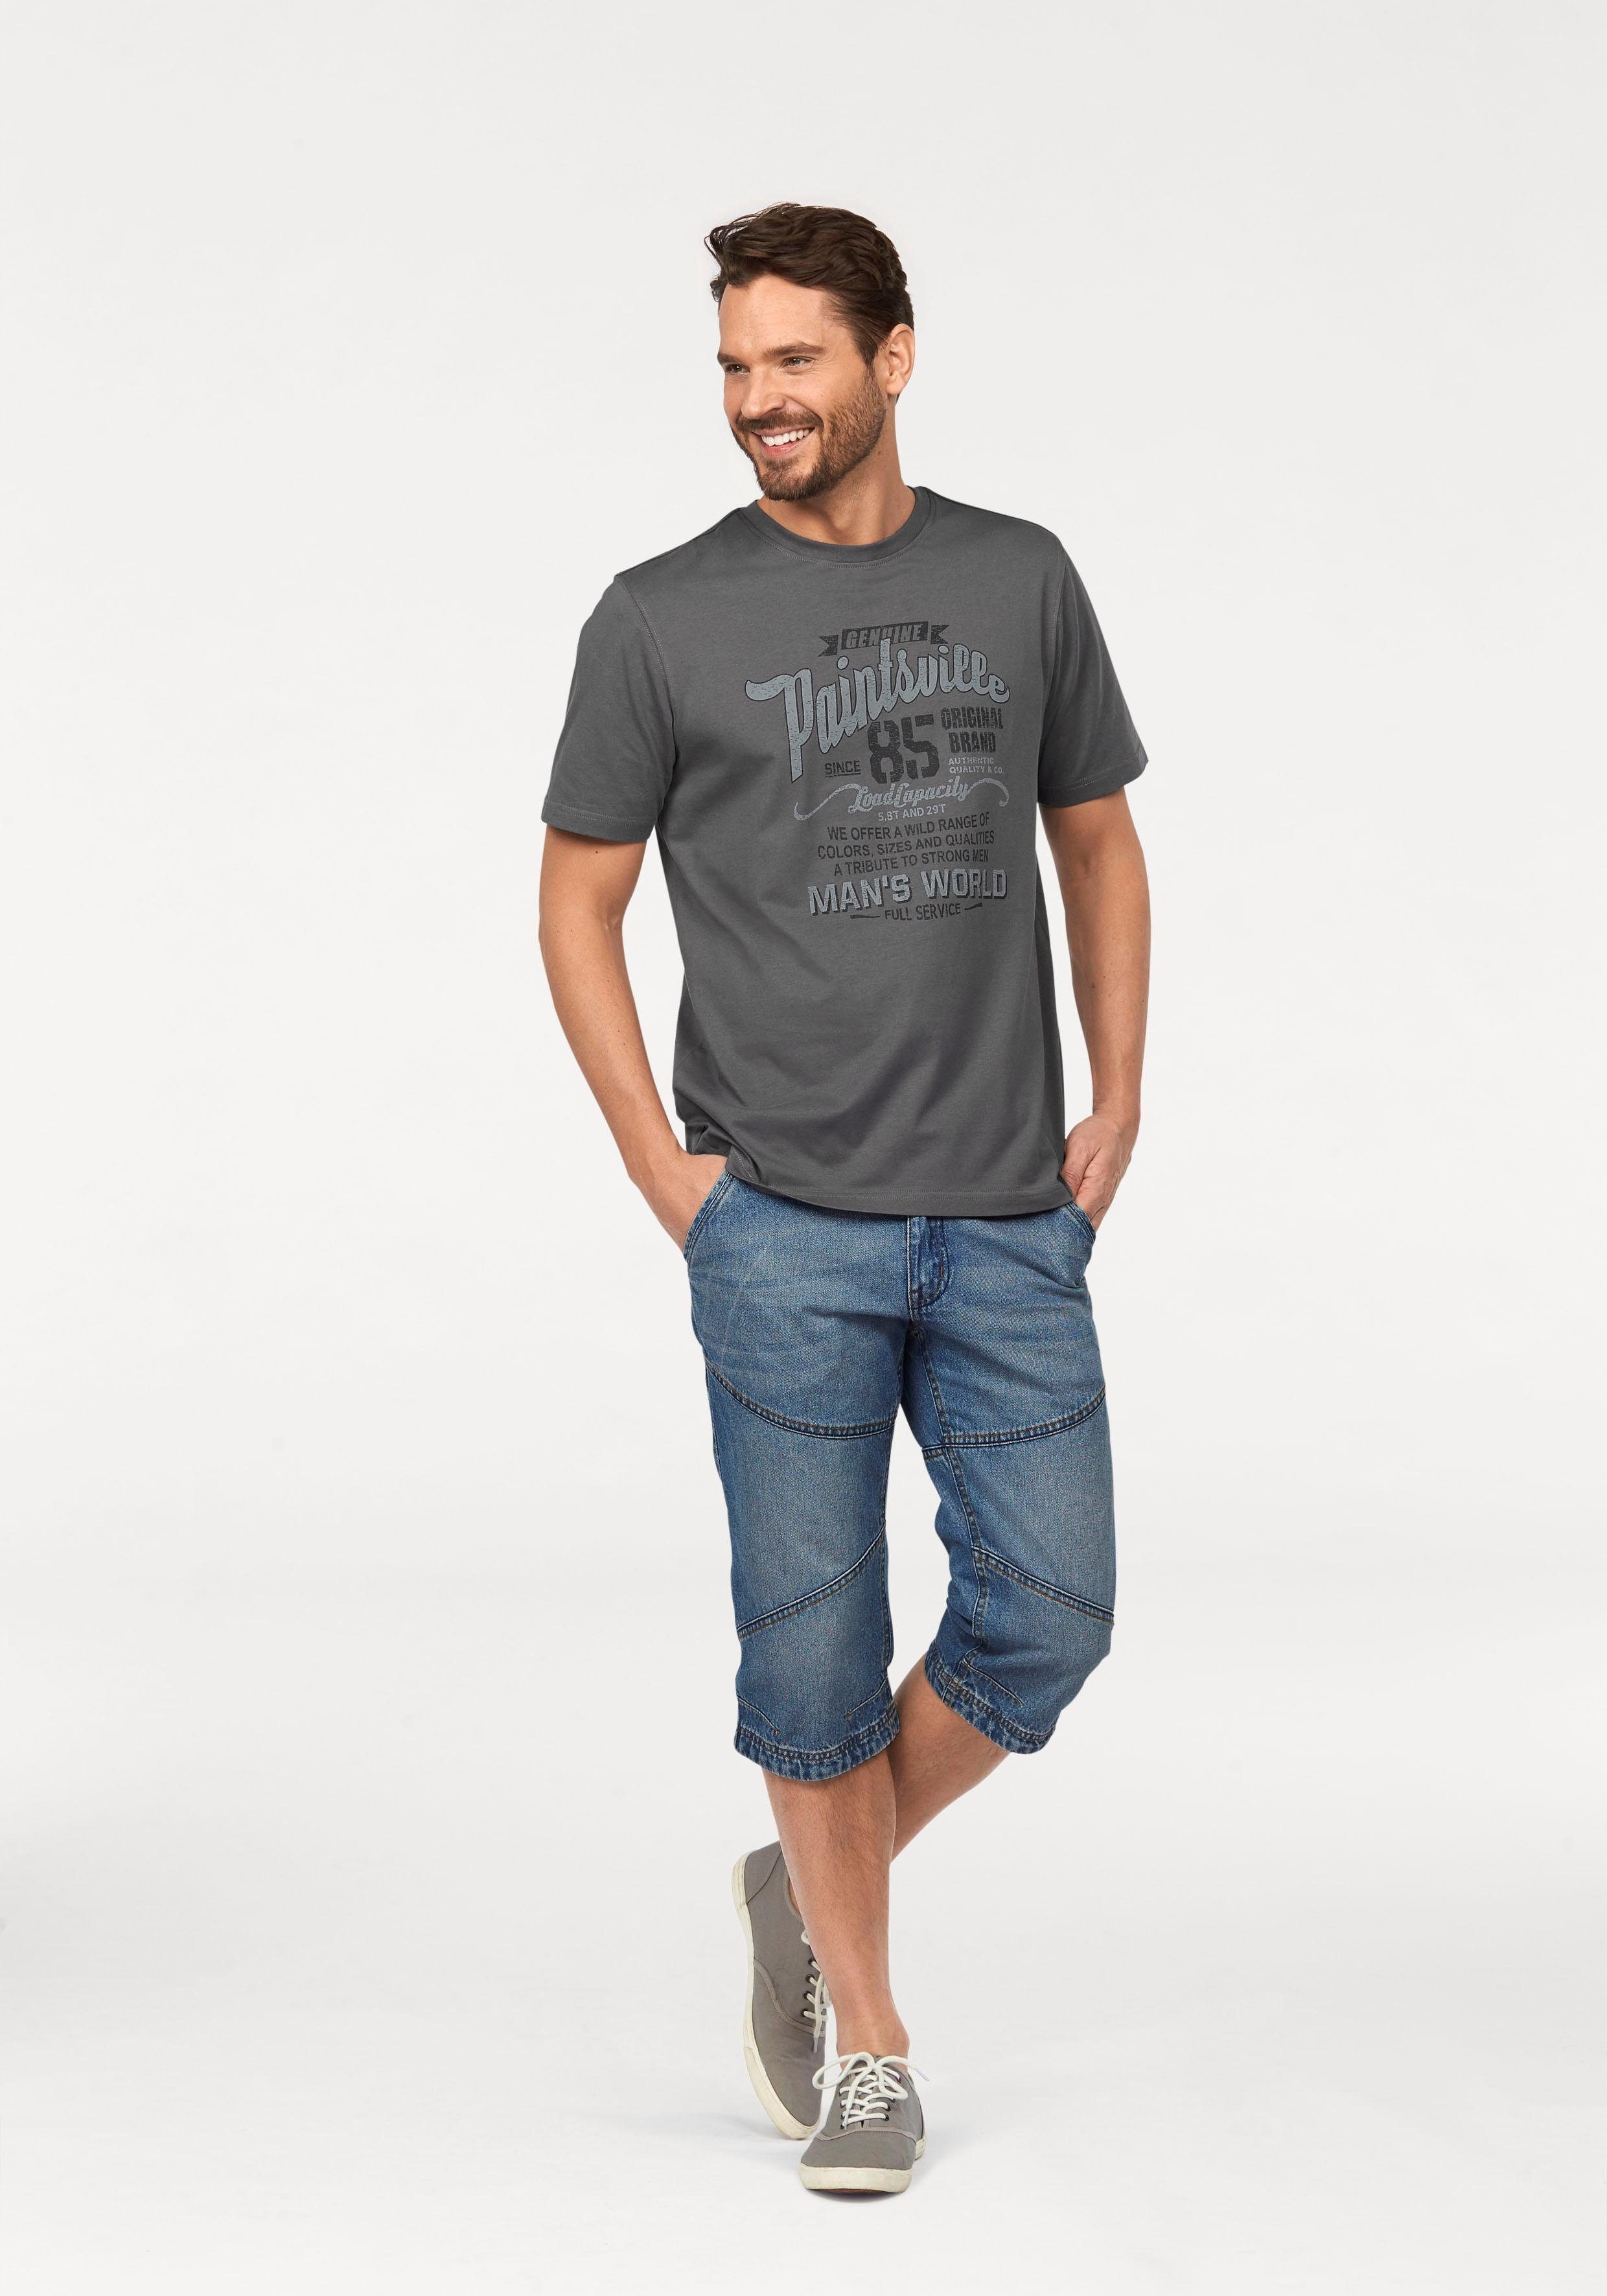 World T-Shirt dunkelgrau Man's mit Print